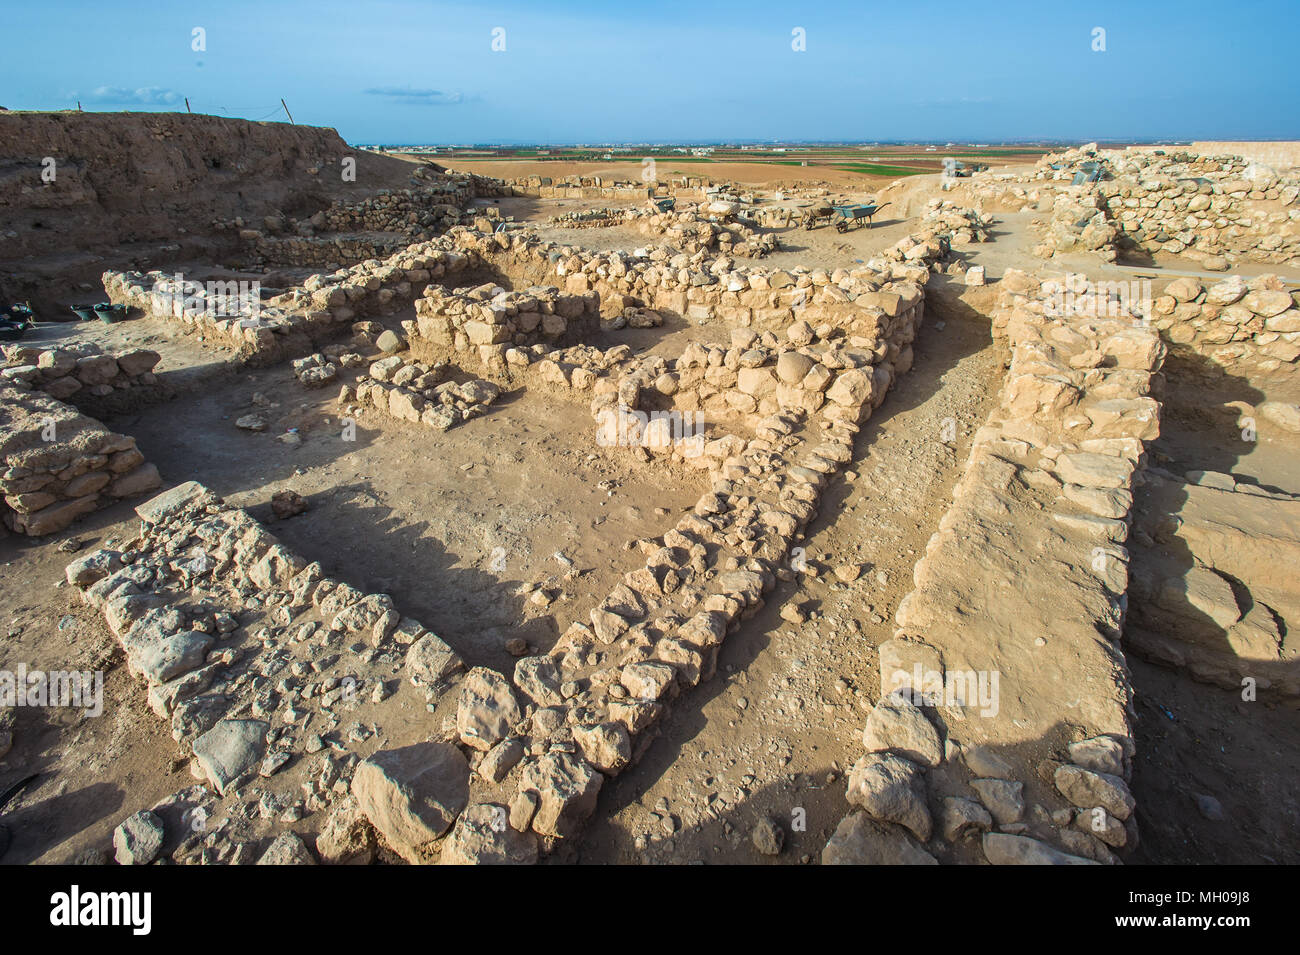 Ruins of Ebla, Syria, an ancient city. Stock Photo